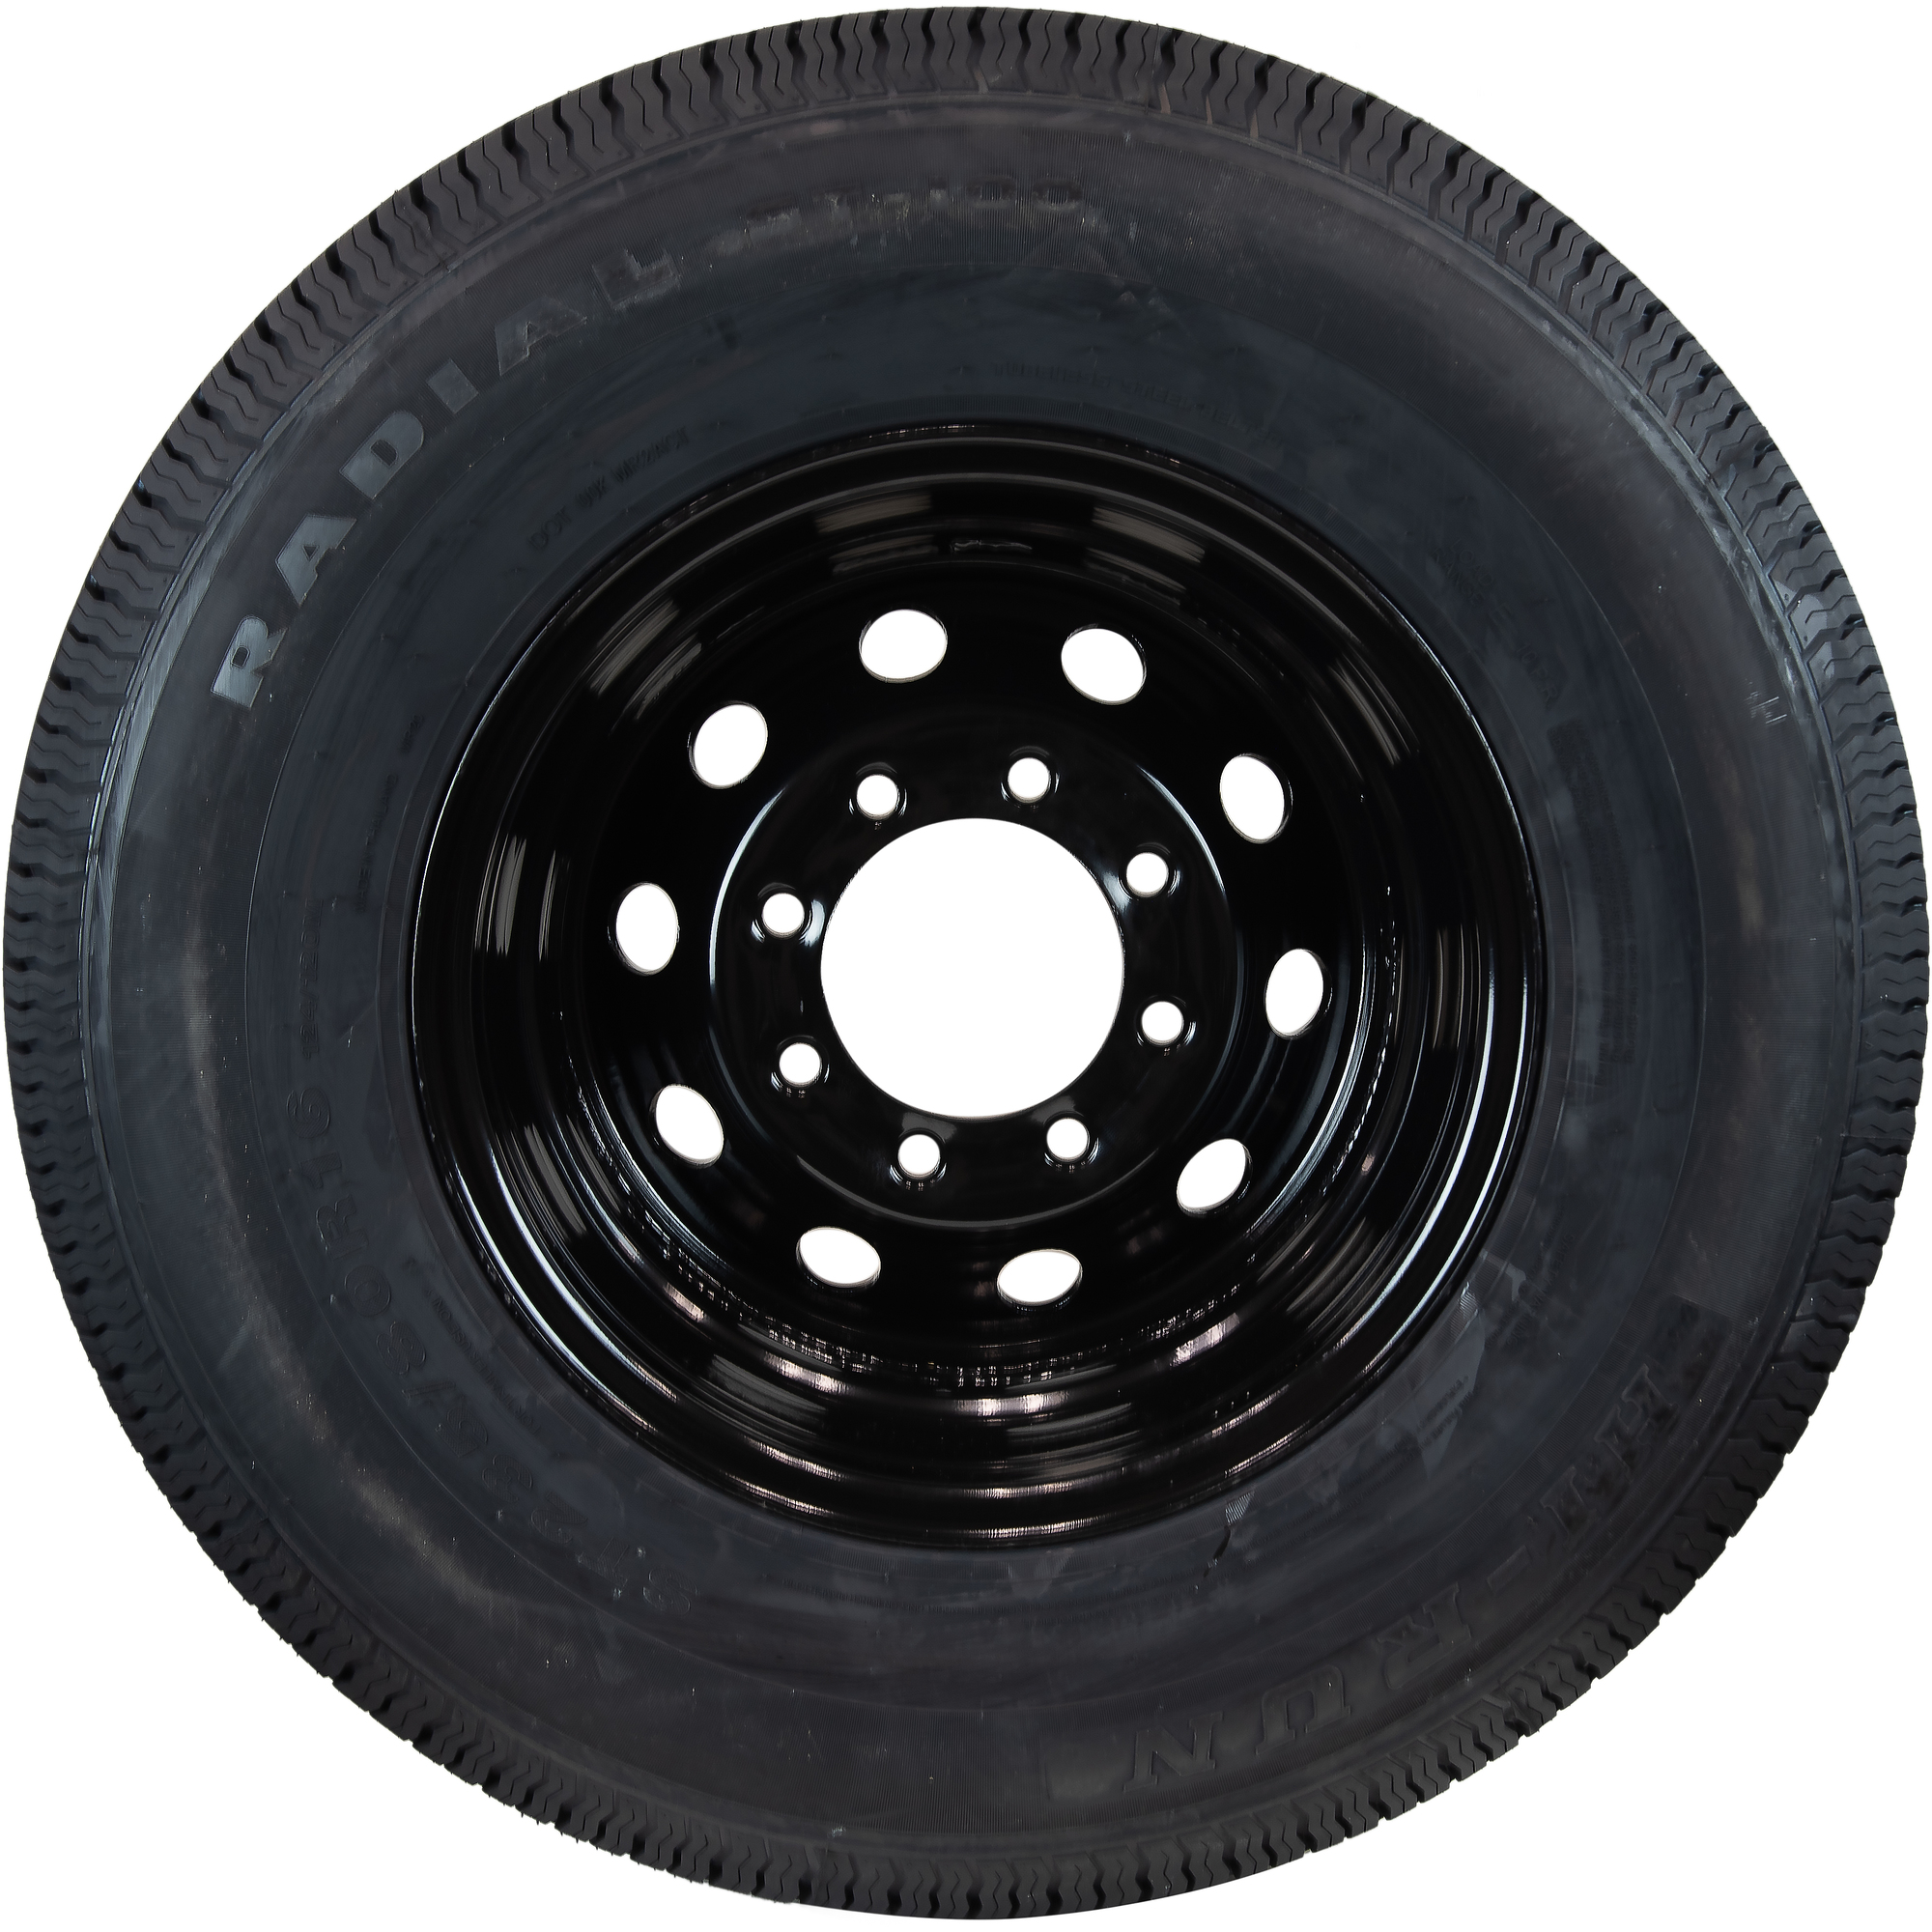 HI-RUN, Highway Trailer Tire Assembly, Radial, Black Mod, Tire 